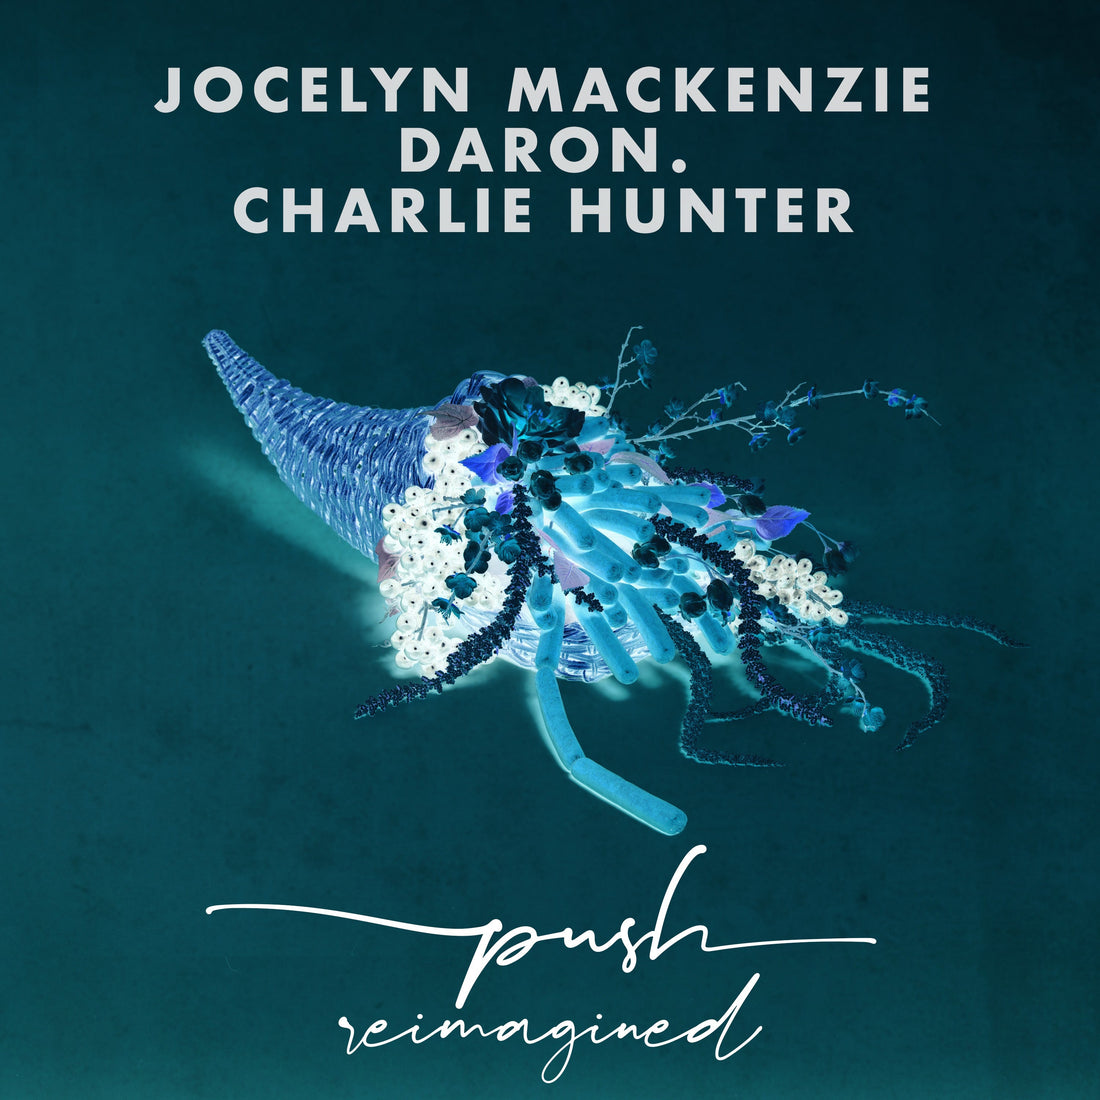 New remix EP from Jocelyn Mackenzie: PUSH Reimagined